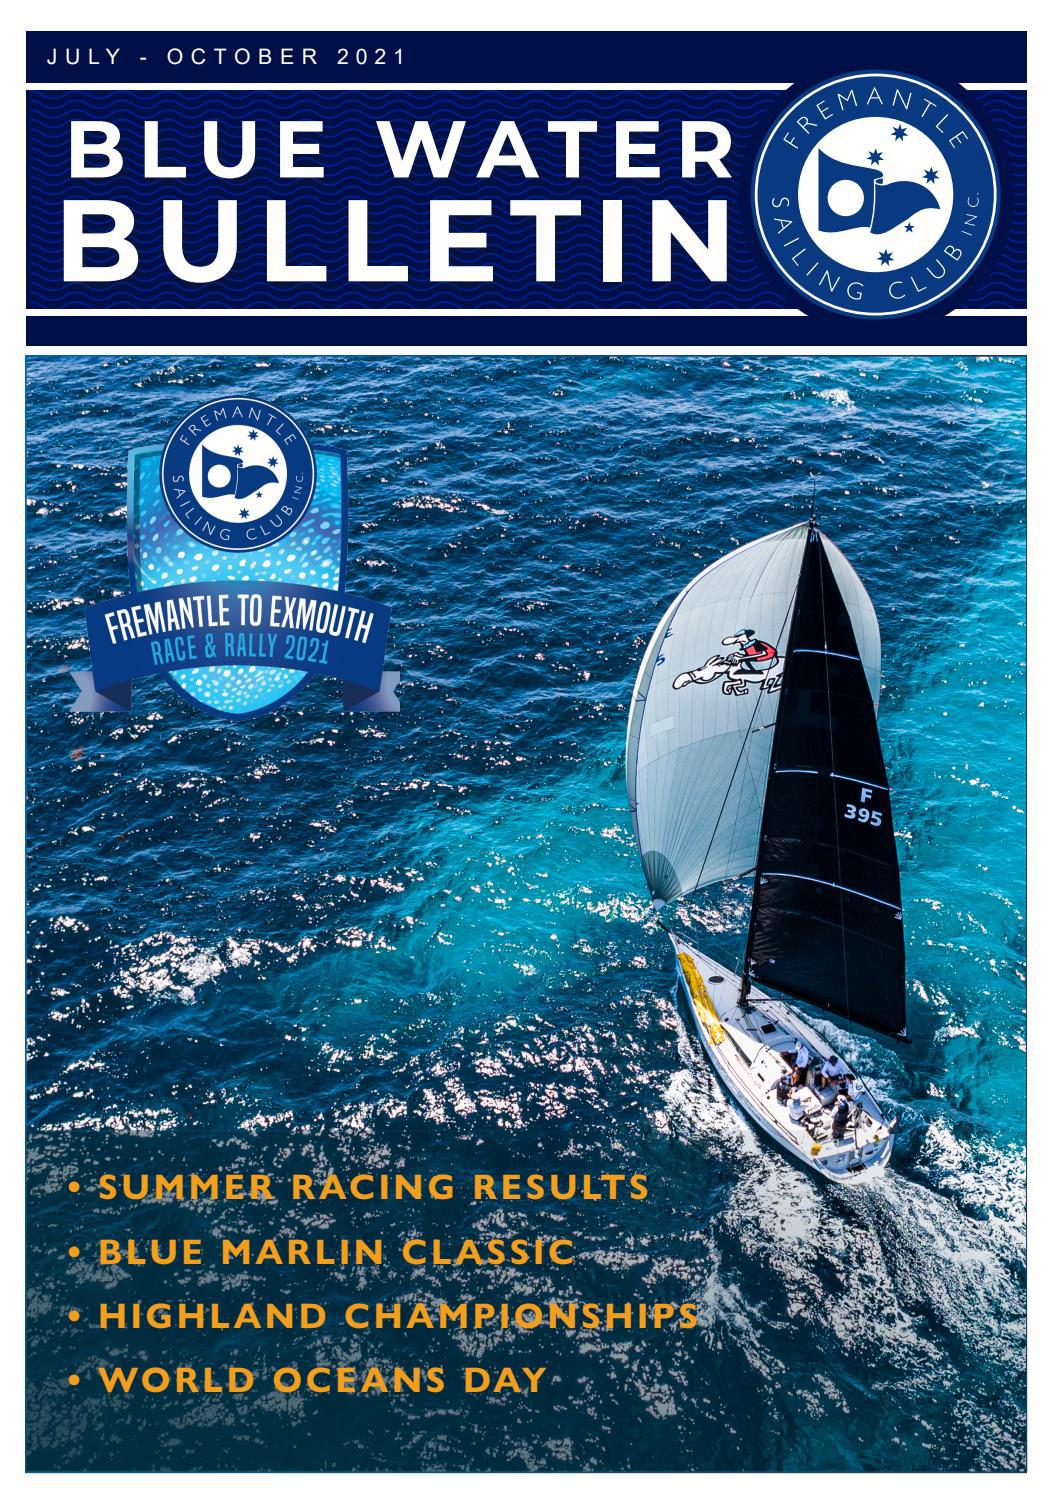 Blue Water Bulletin Magazine, July - October 2021